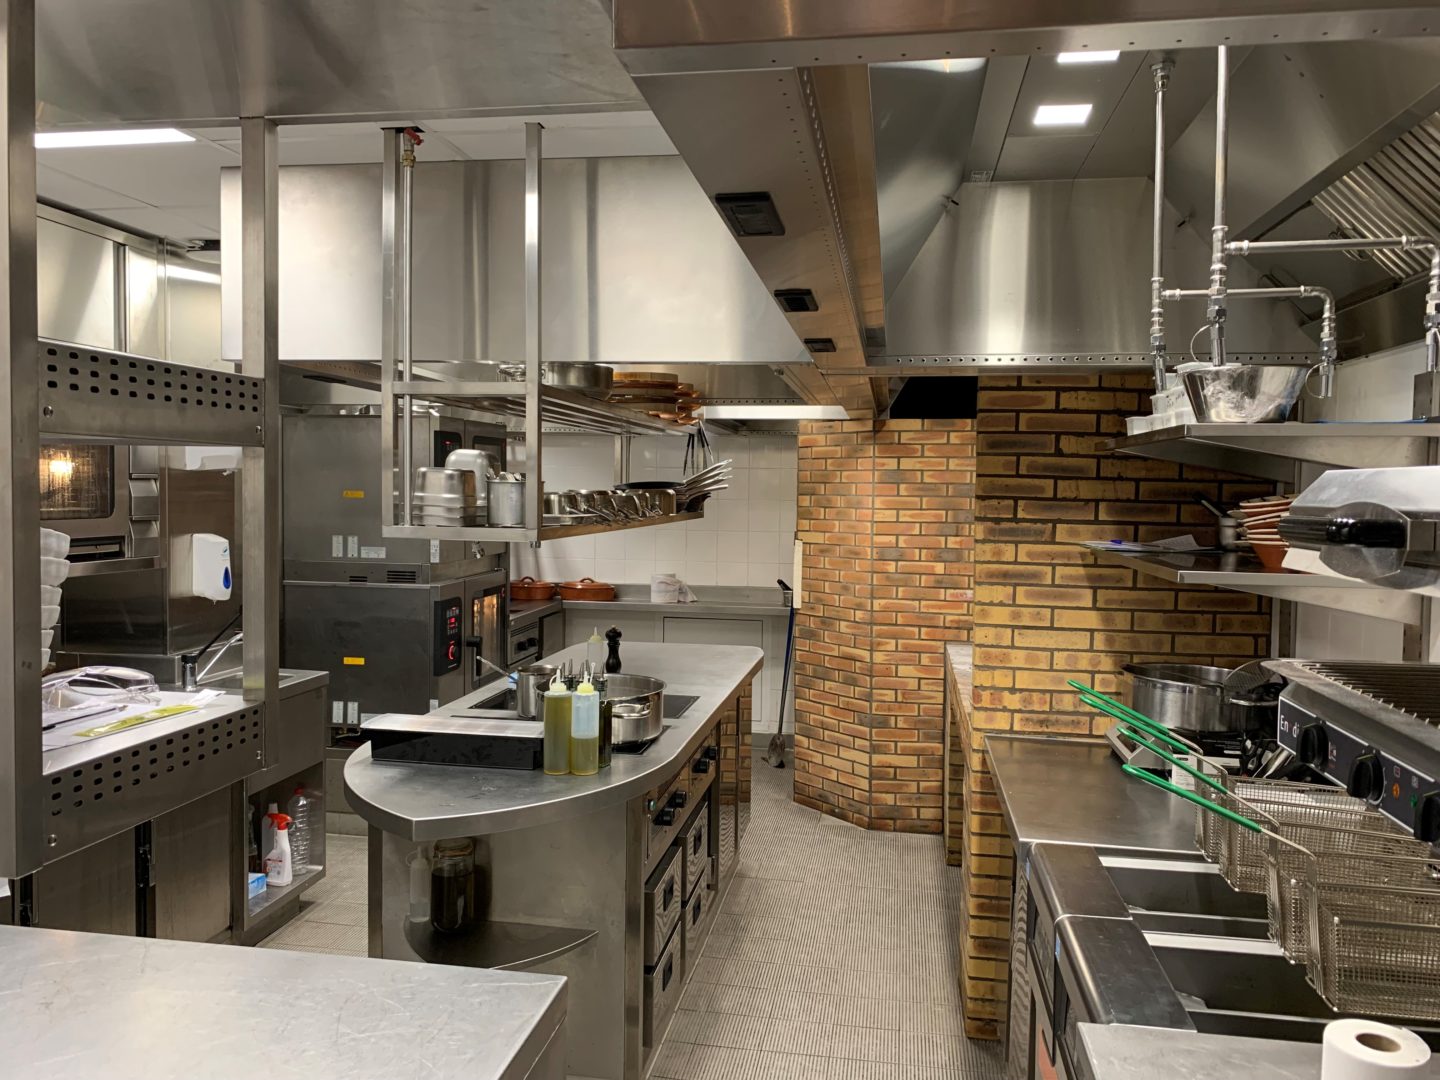 Mimosa at Hotel de la Marine has chosen Halton Solutions for the ventilation of their kitchen